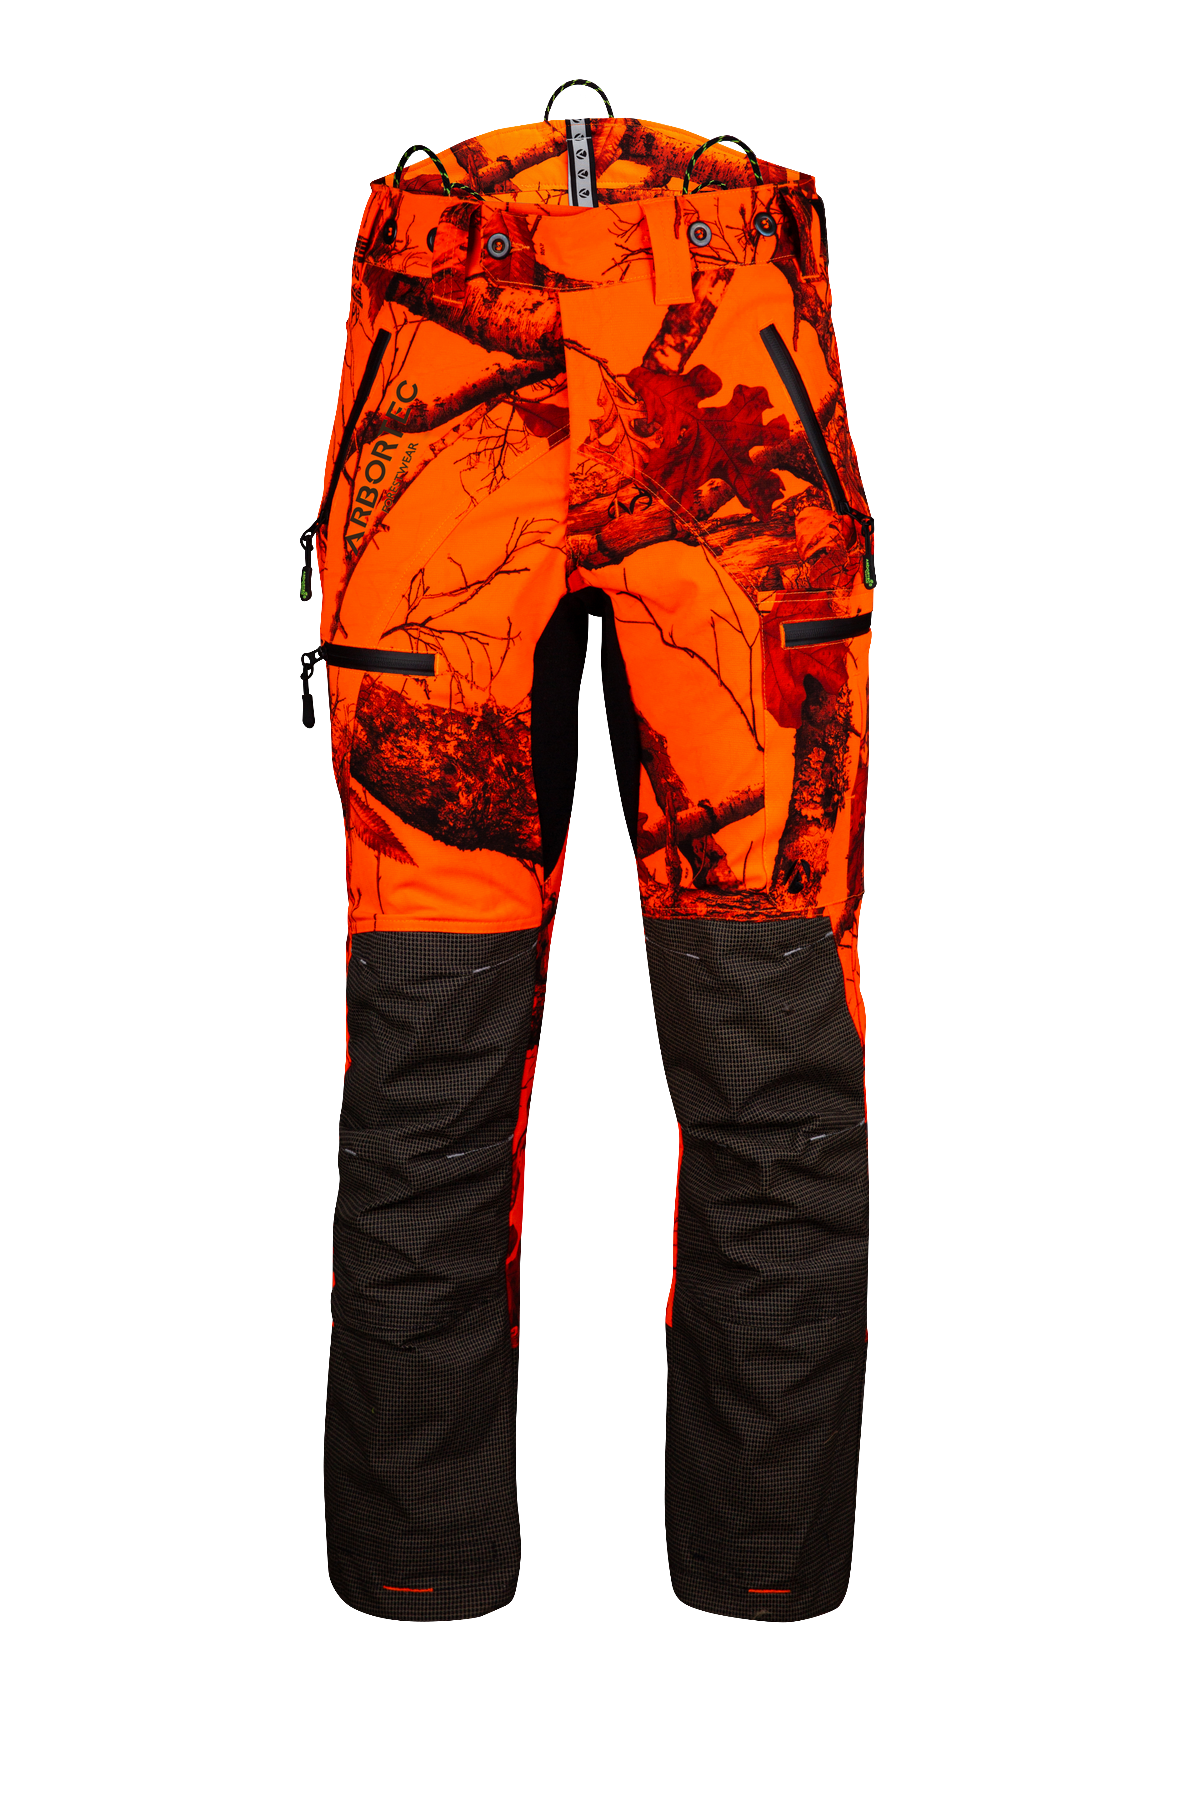 AT4060 - Breatheflex Pro Realtree Chainsaw Trousers Design A/Class 1 - Orange